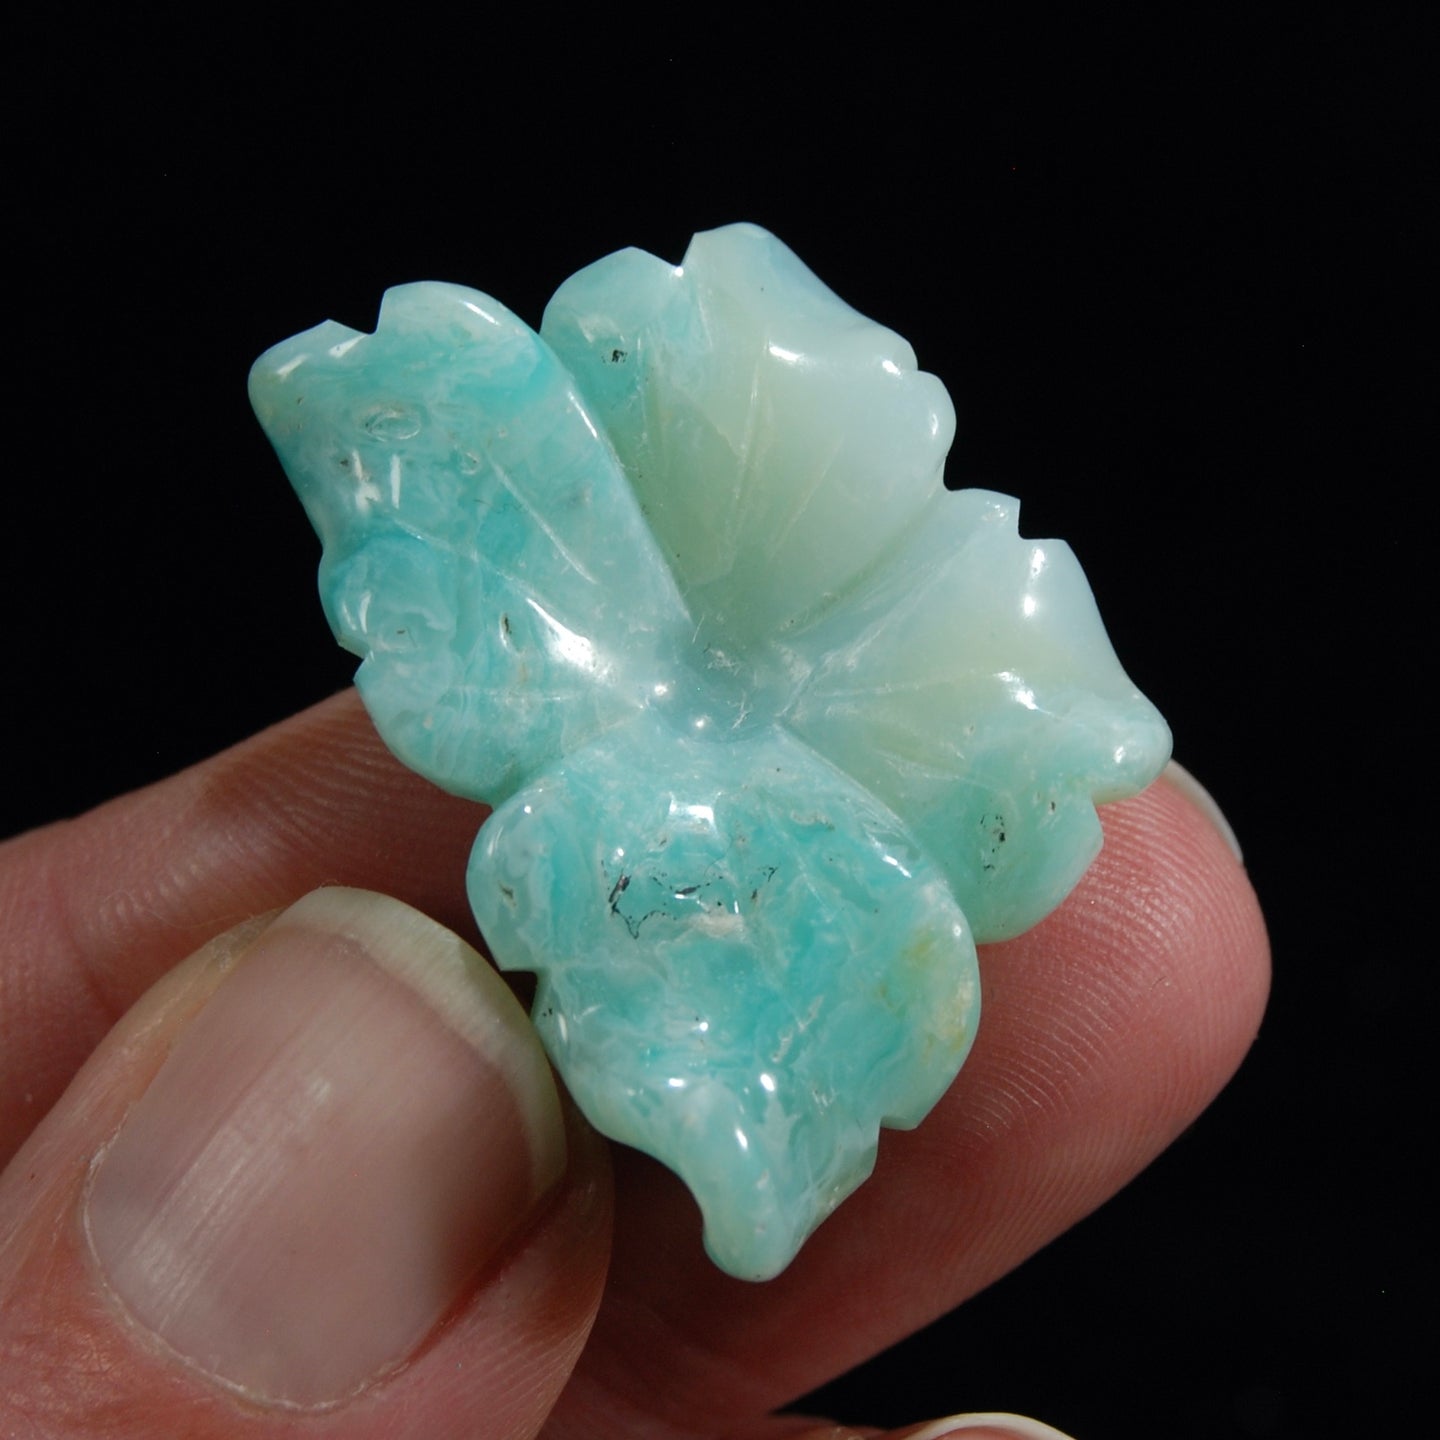 Blue Andean Opal Carved Crystal Flower, Natural Blue Opal Gemstone Carving, Peru